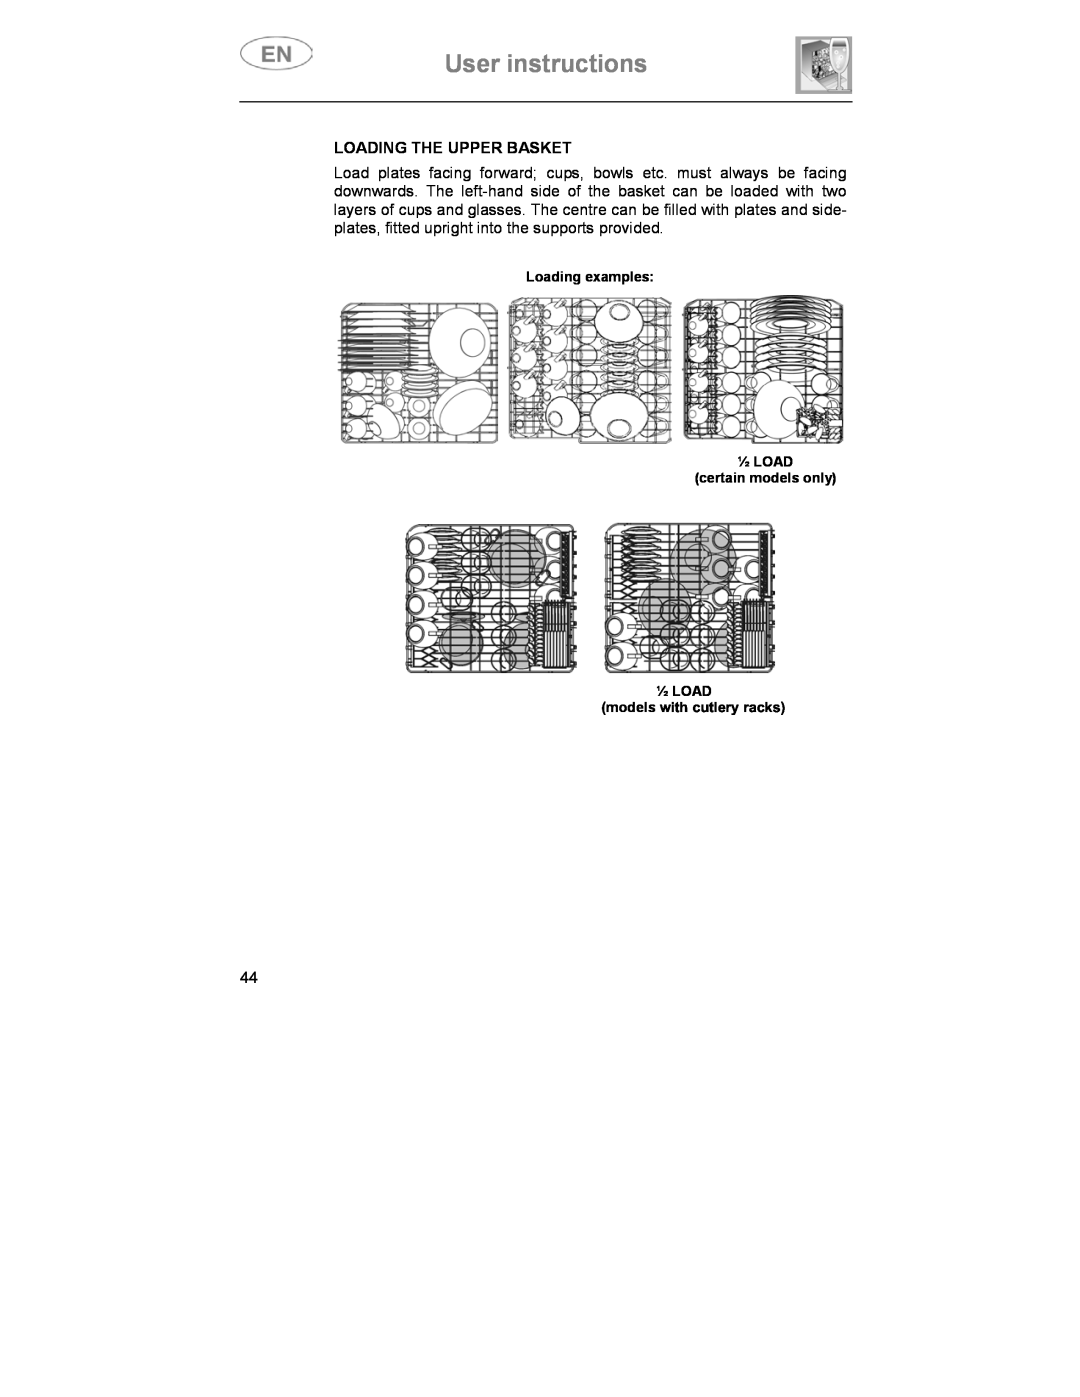 Smeg CA01-3 User instructions, Loading The Upper Basket, Loading examples ½ LOAD certain models only ½ LOAD 